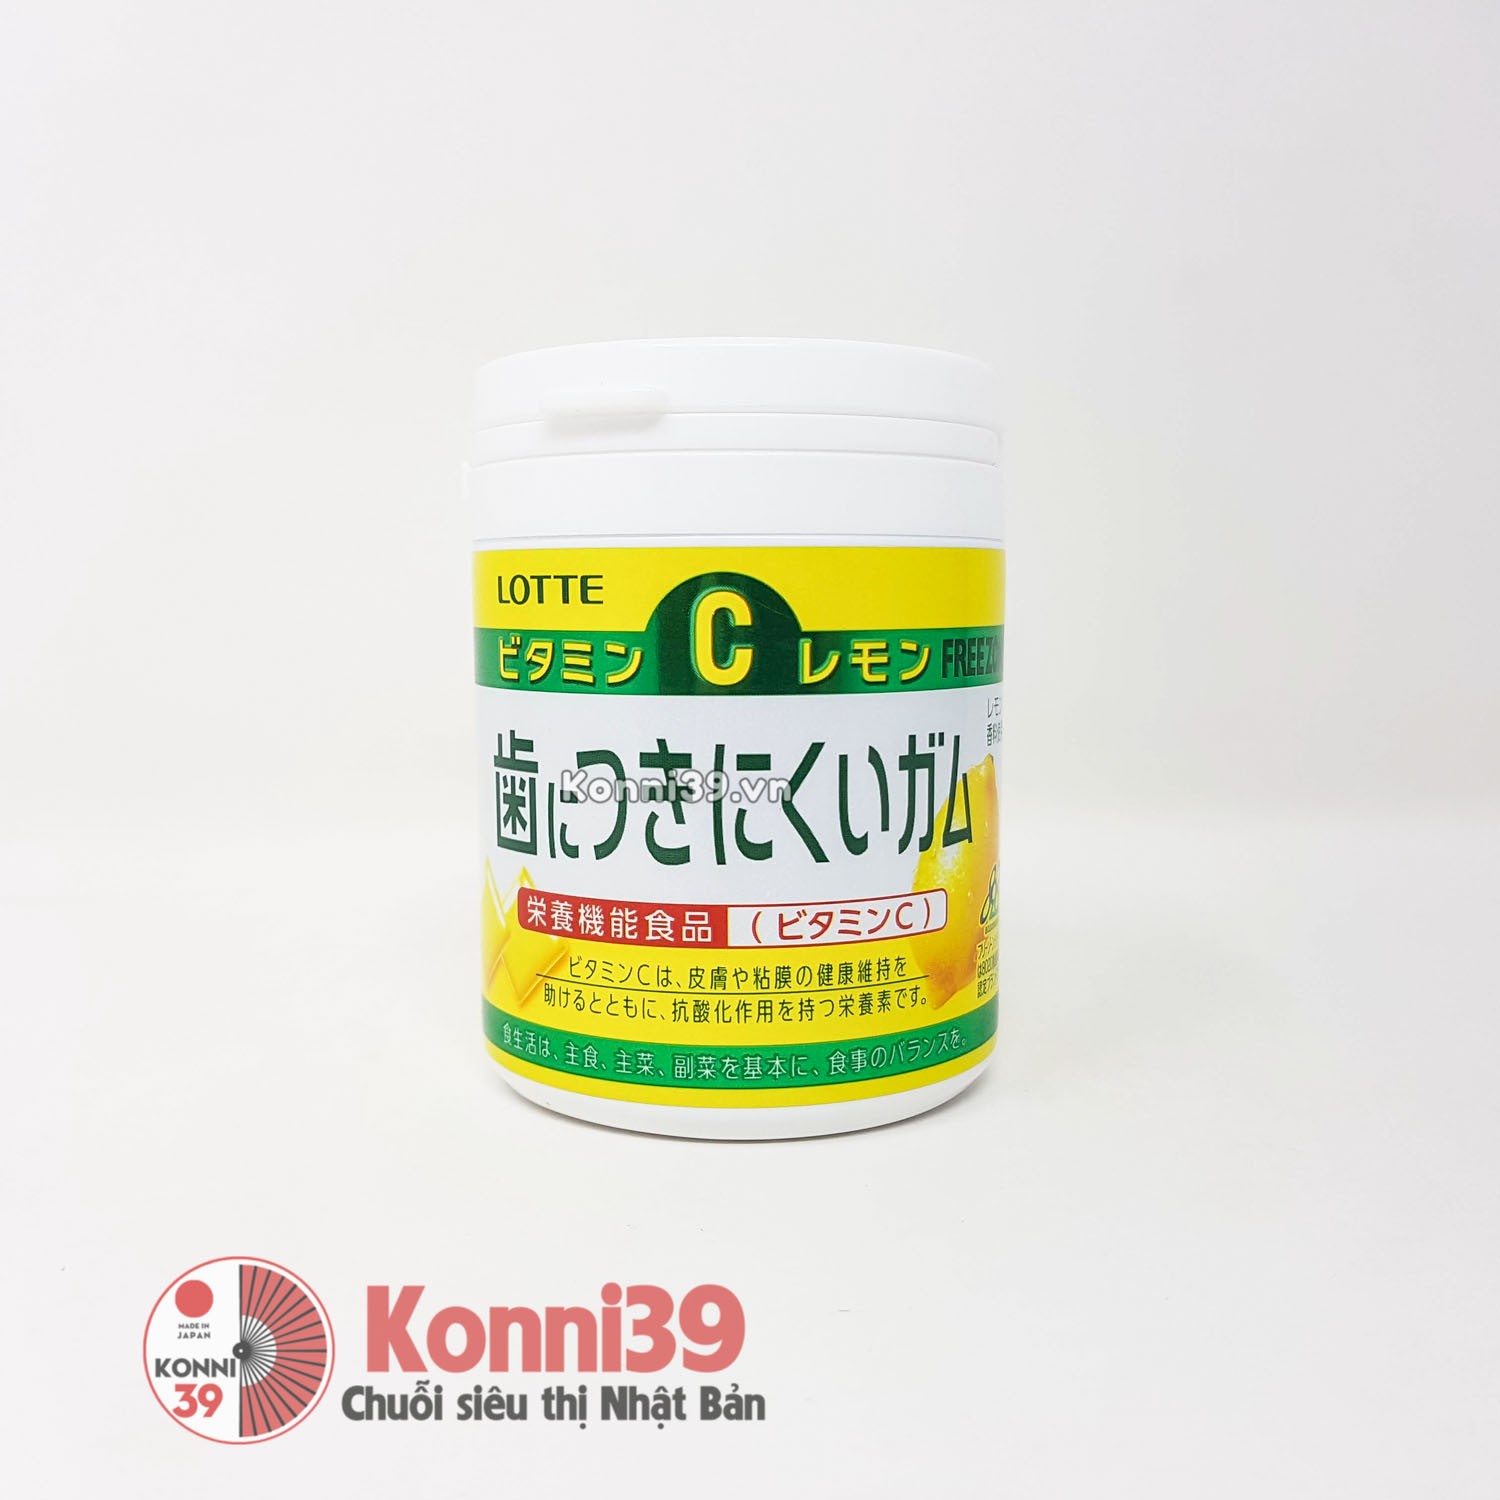 Kẹo cao su Lotte bổ sung vitamin C 138g - Hương chanh